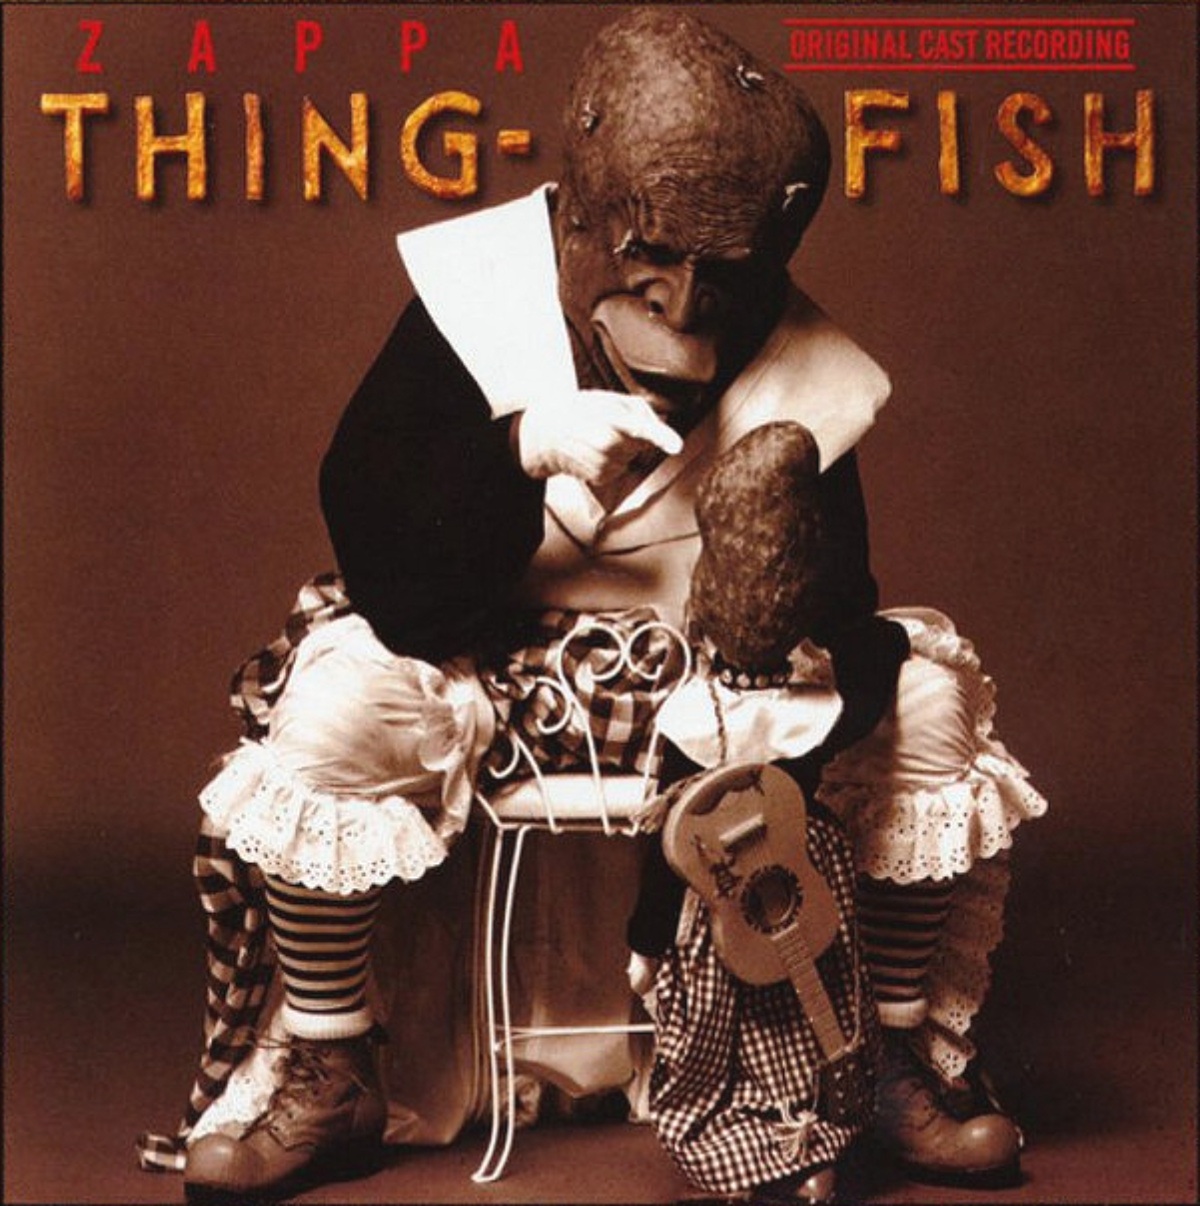 Фрэнк Заппа: Thing-Fish (обложка альбома)